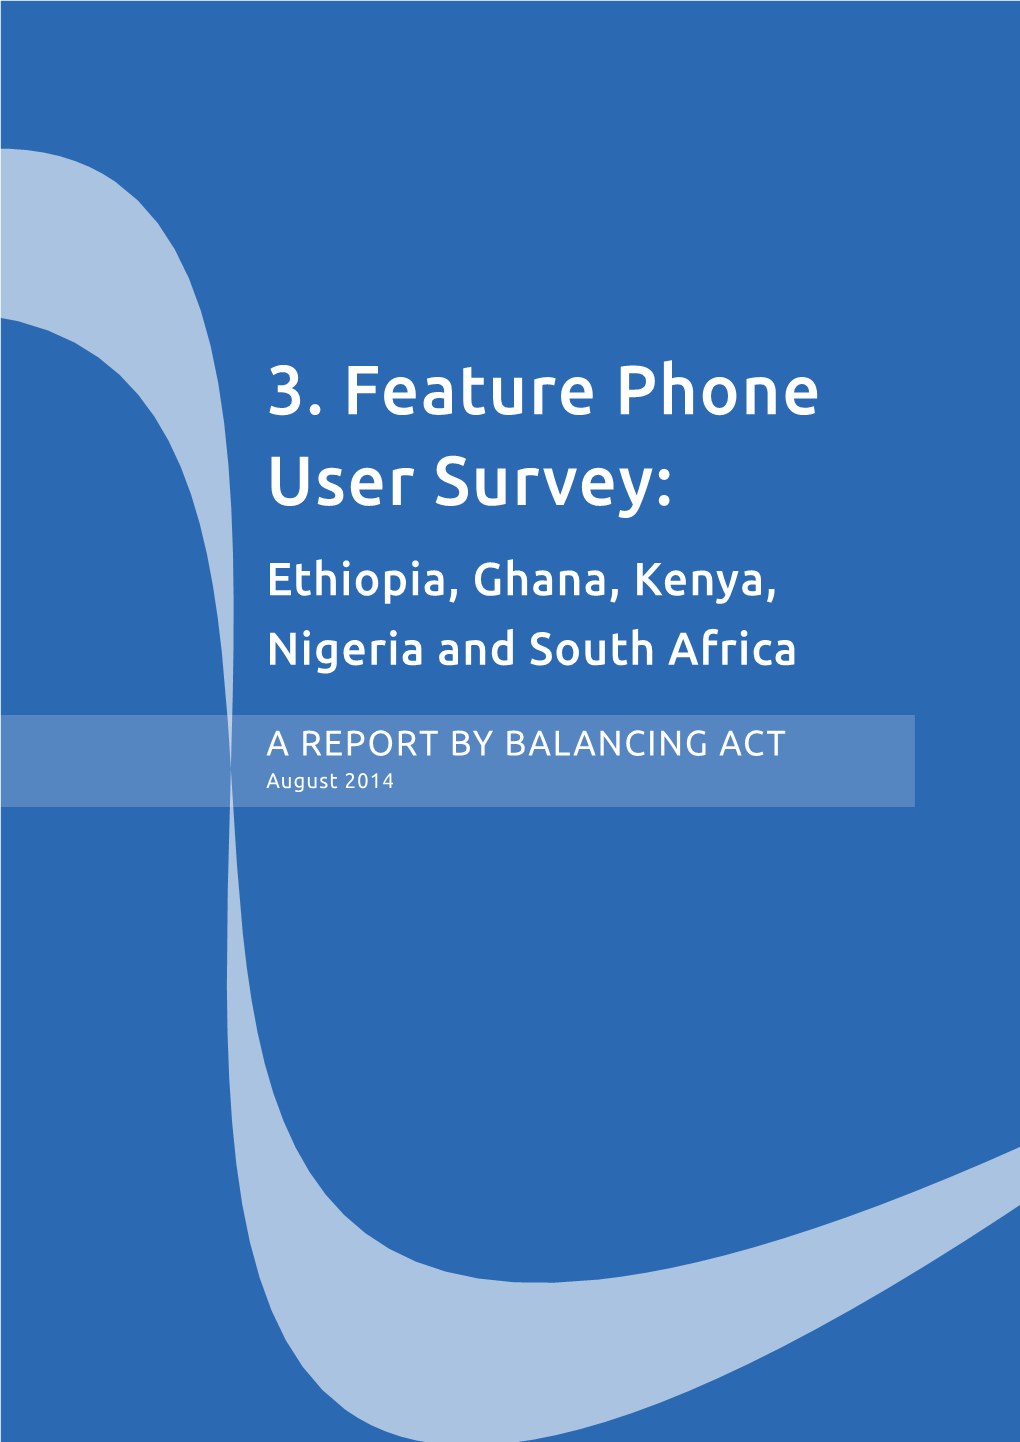 Feature Phone User Survey: Ethiopia, Ghana, Kenya, Nigeria and South Africa